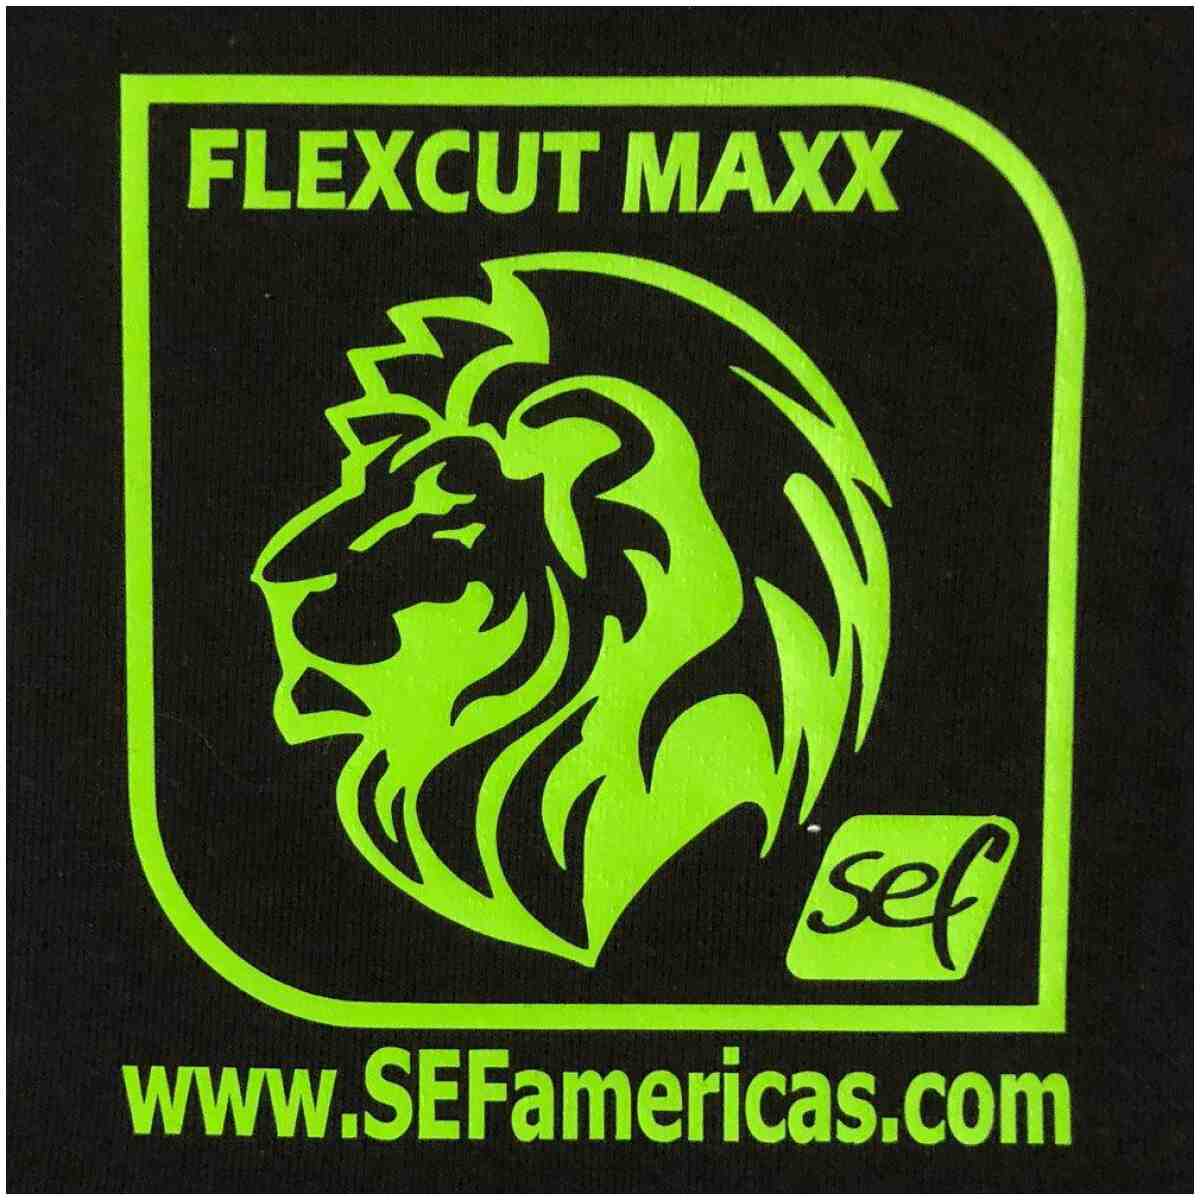 Flexcut Maxx Matt Finish Heat Transfer Vinyl 20" SEF AMERICA®